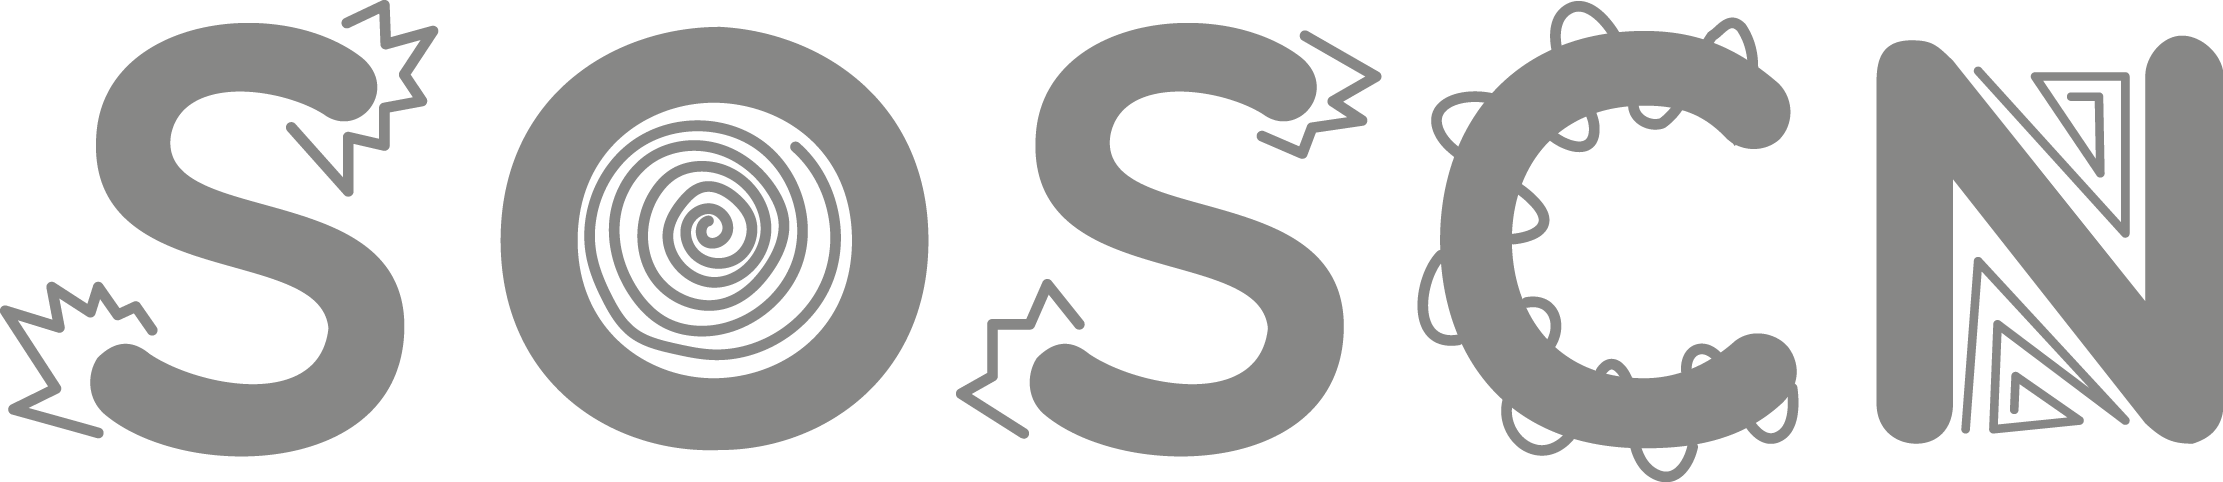 image for SOSCN_logo_grey